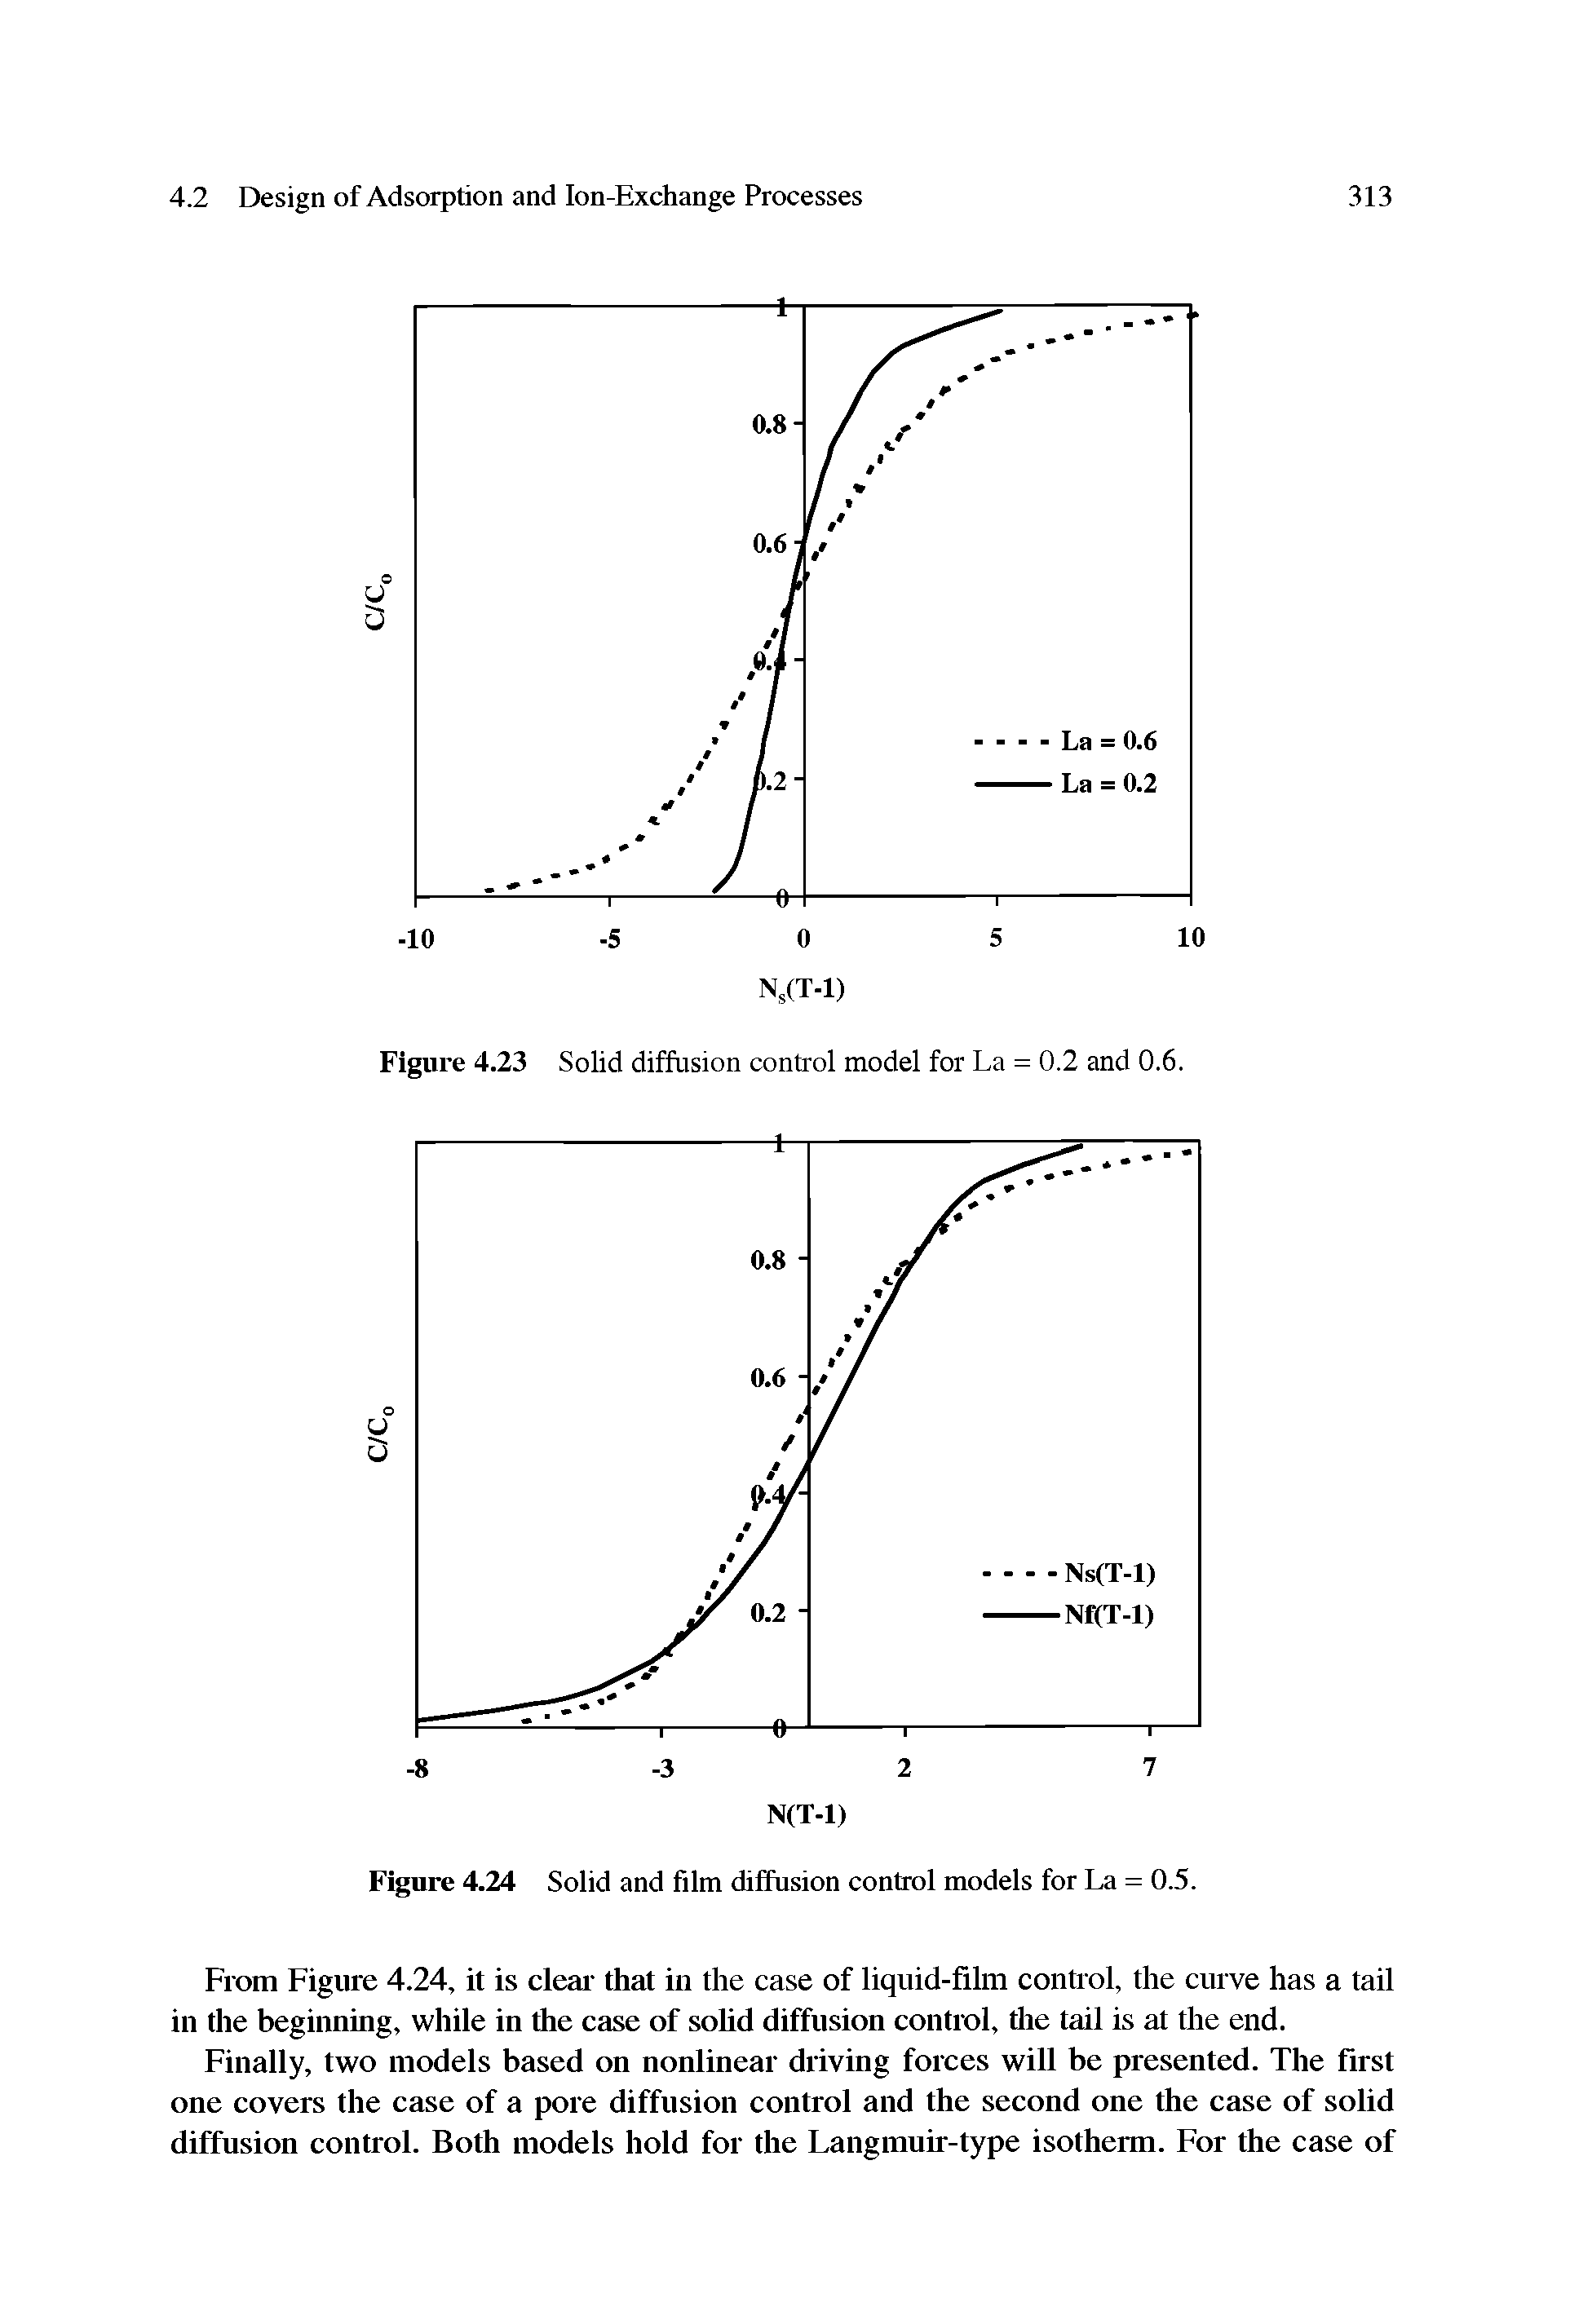 Figure 4.24 Solid and film diffusion control models for La = 0.5.